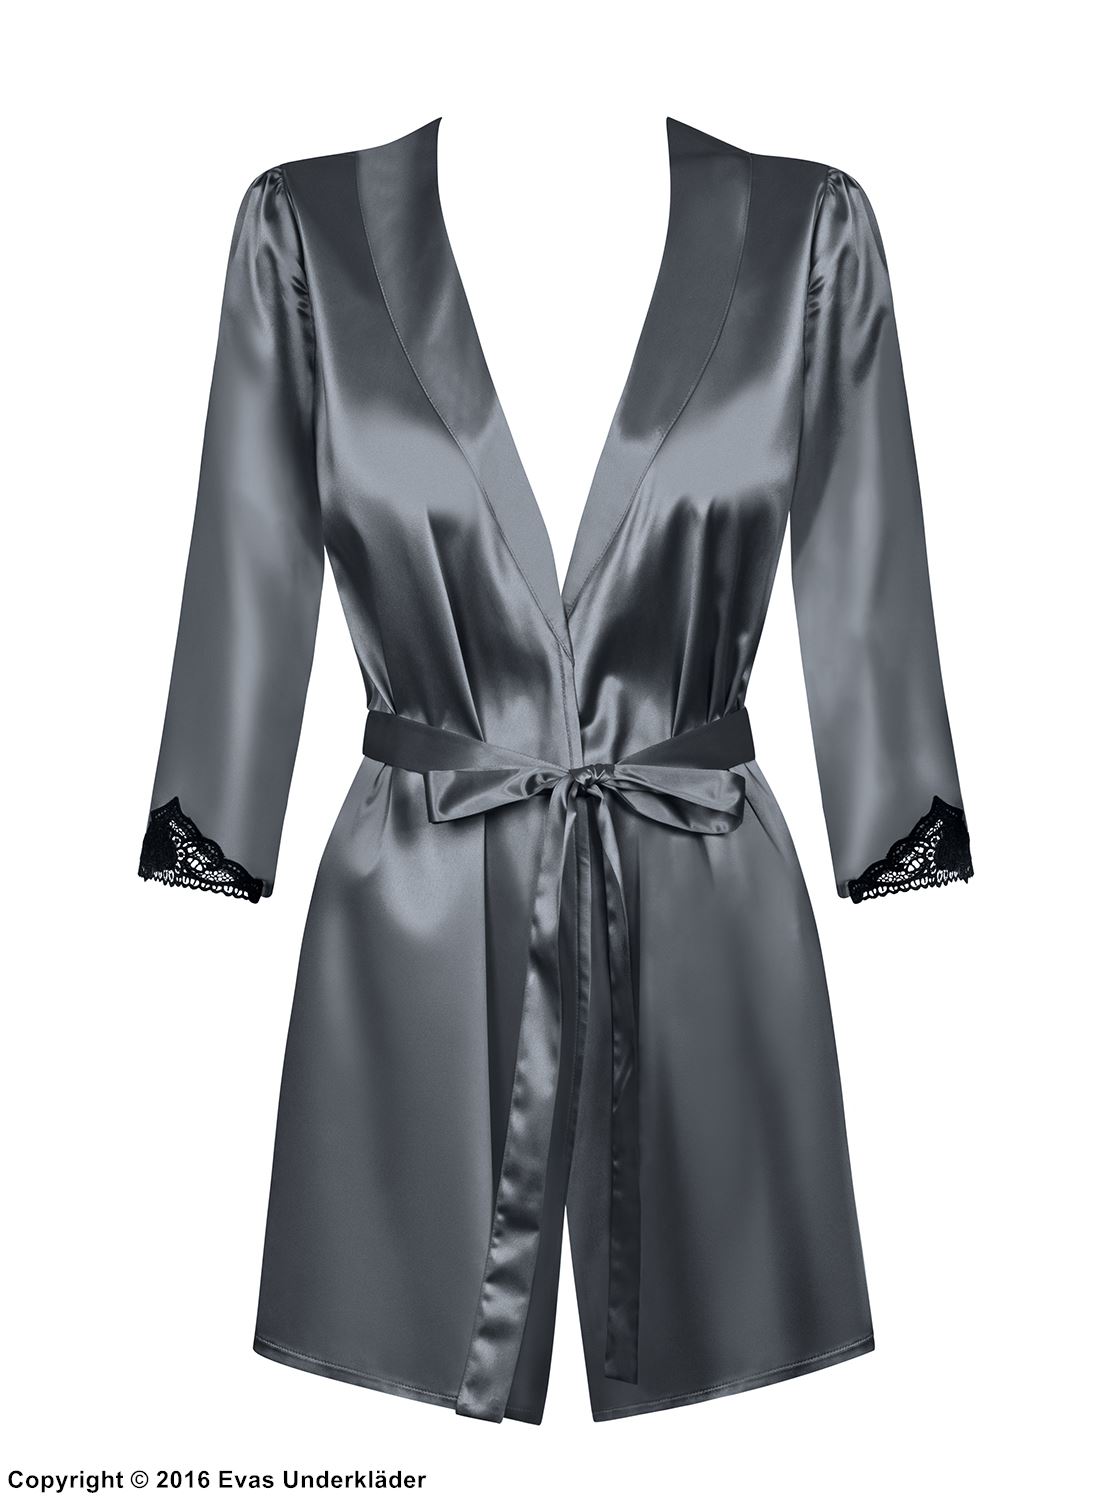 Elegant robe, satin, lace trim, sash